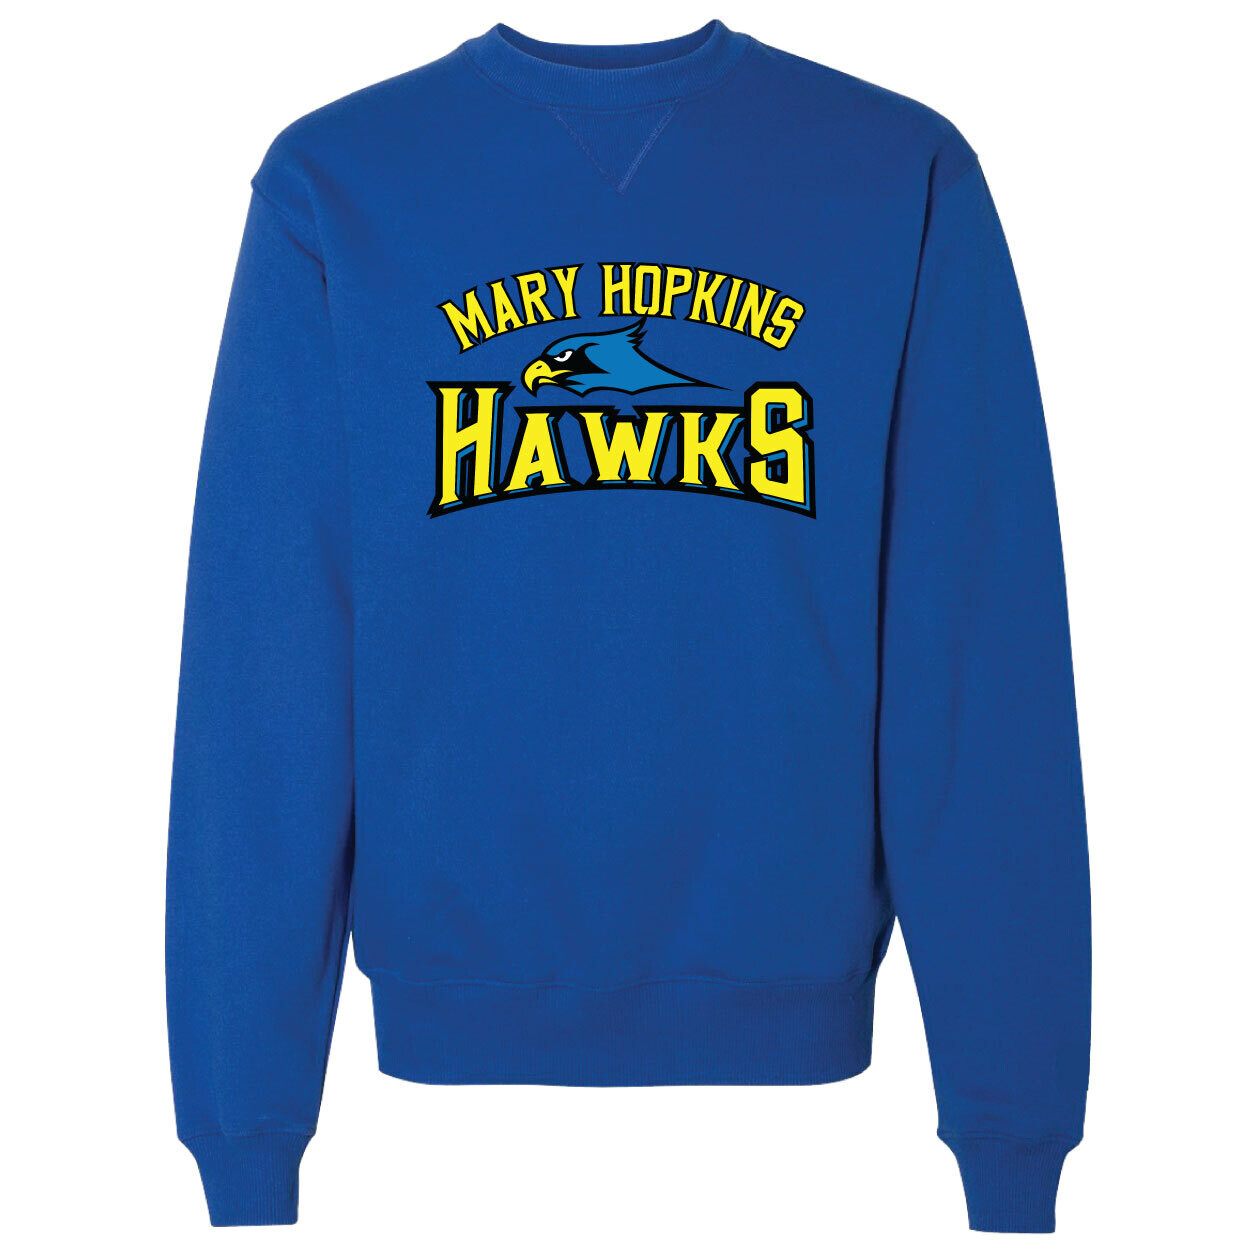 Mary Hopkins Hawks - Crew Neck Sweatshirt (multi colour print)